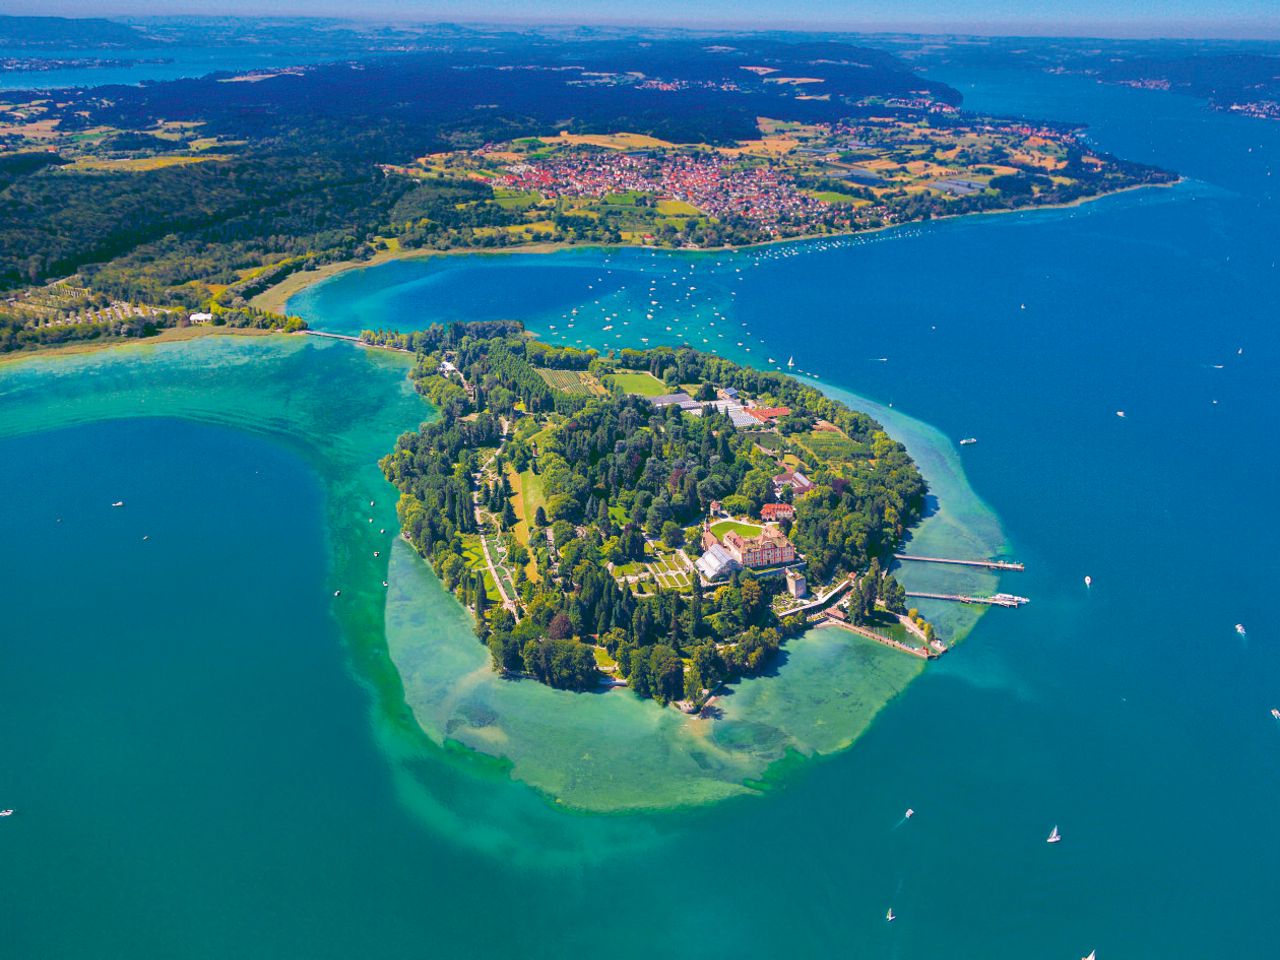 Blumige Farbenpracht-Insel Mainau im Bodensee | 4 T.